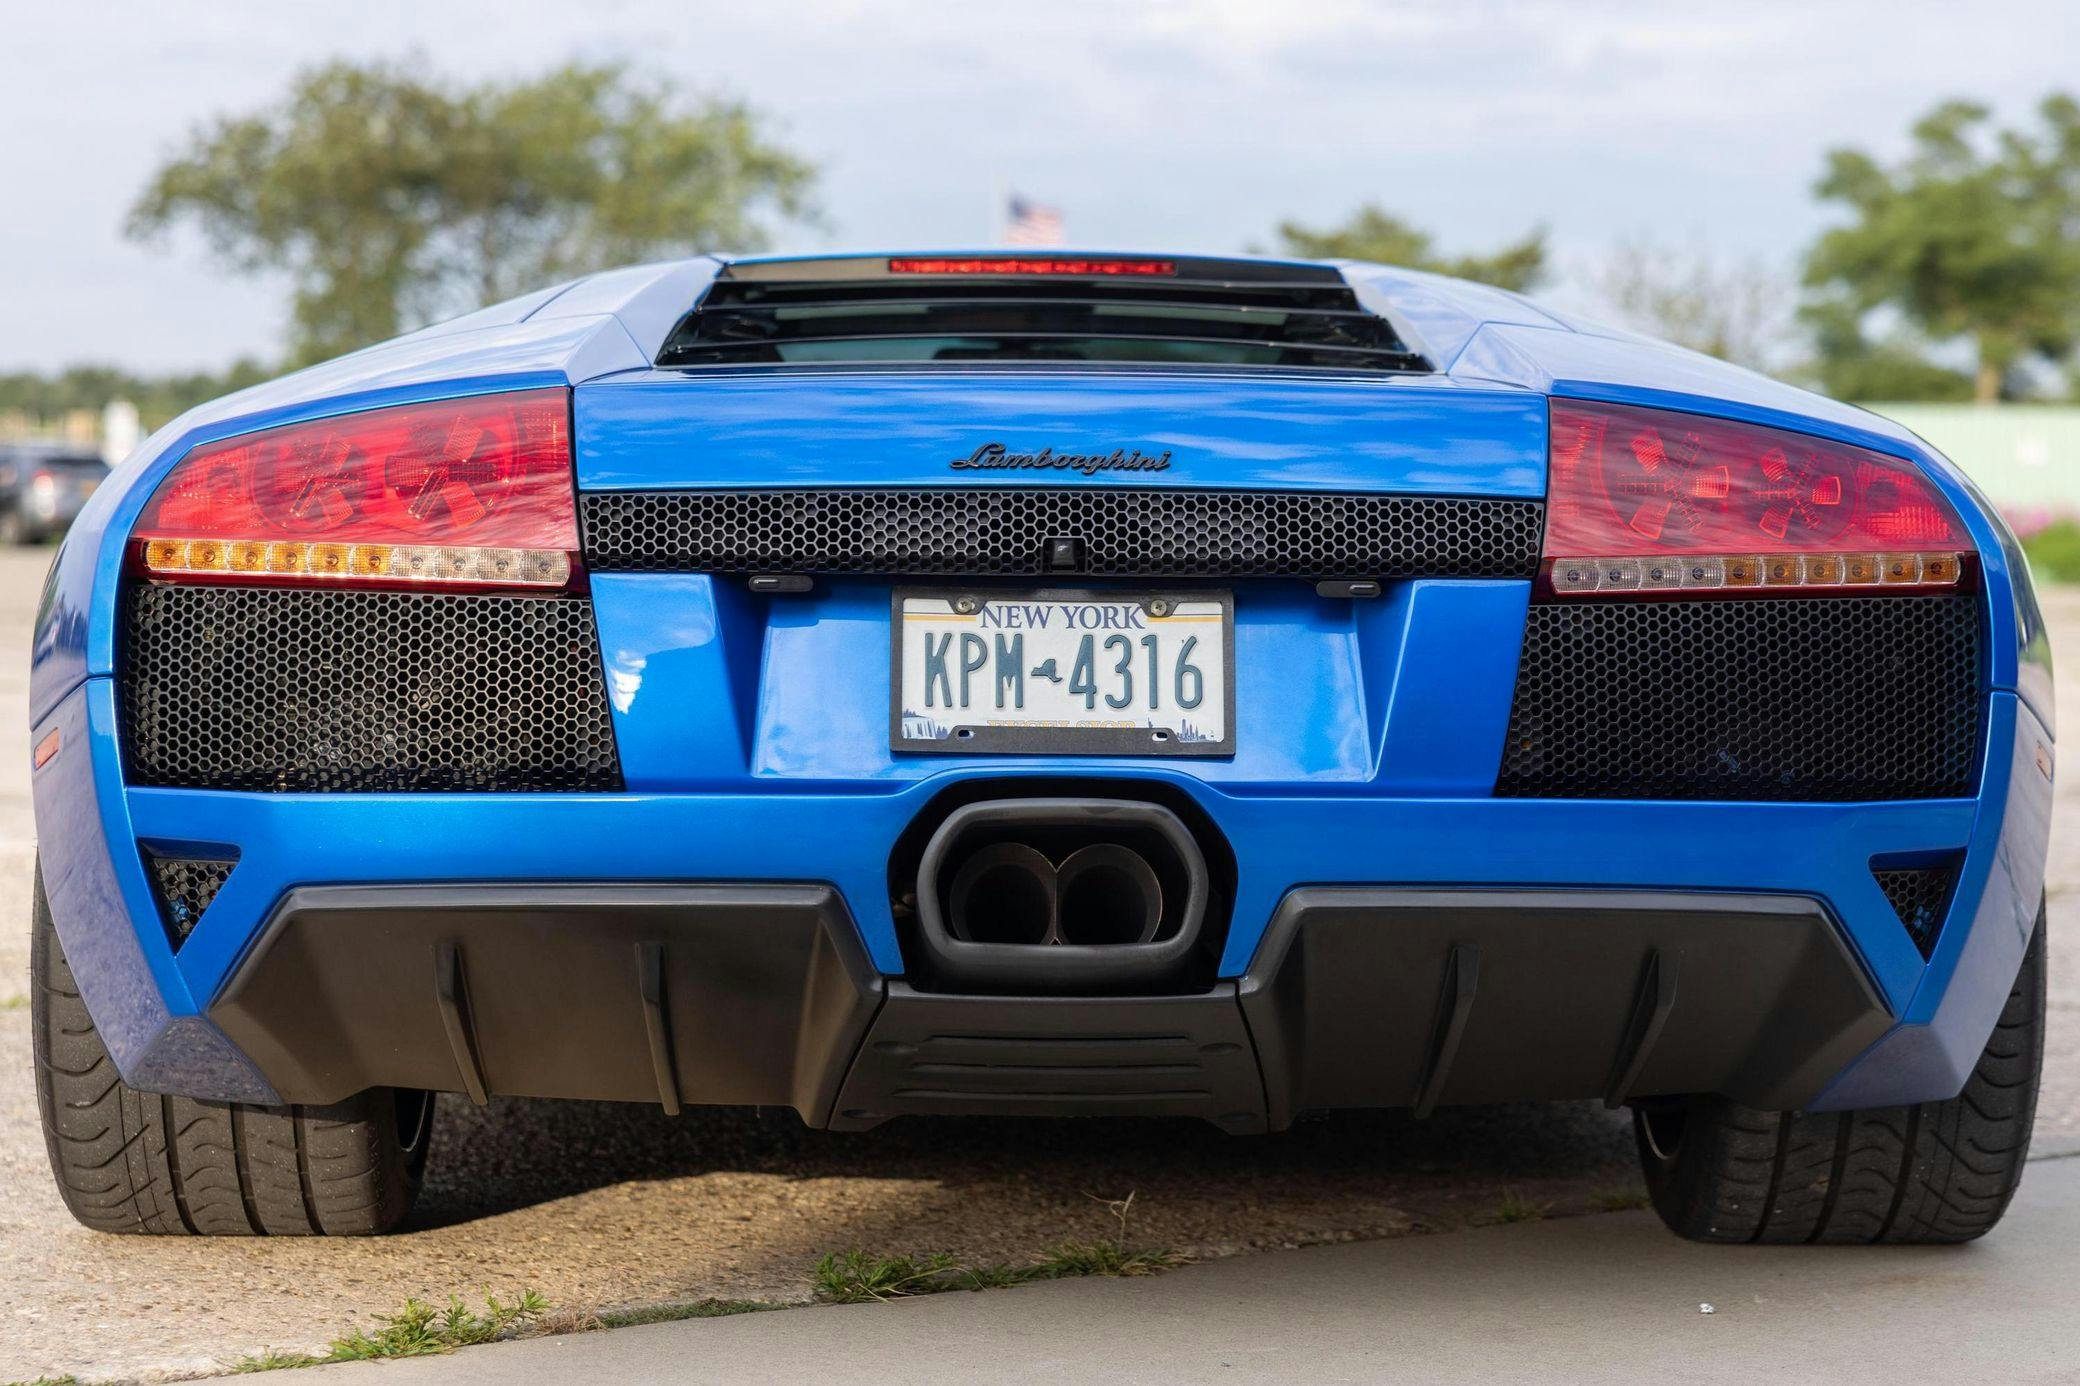 Lamborghini Murciélago LP-640 rear